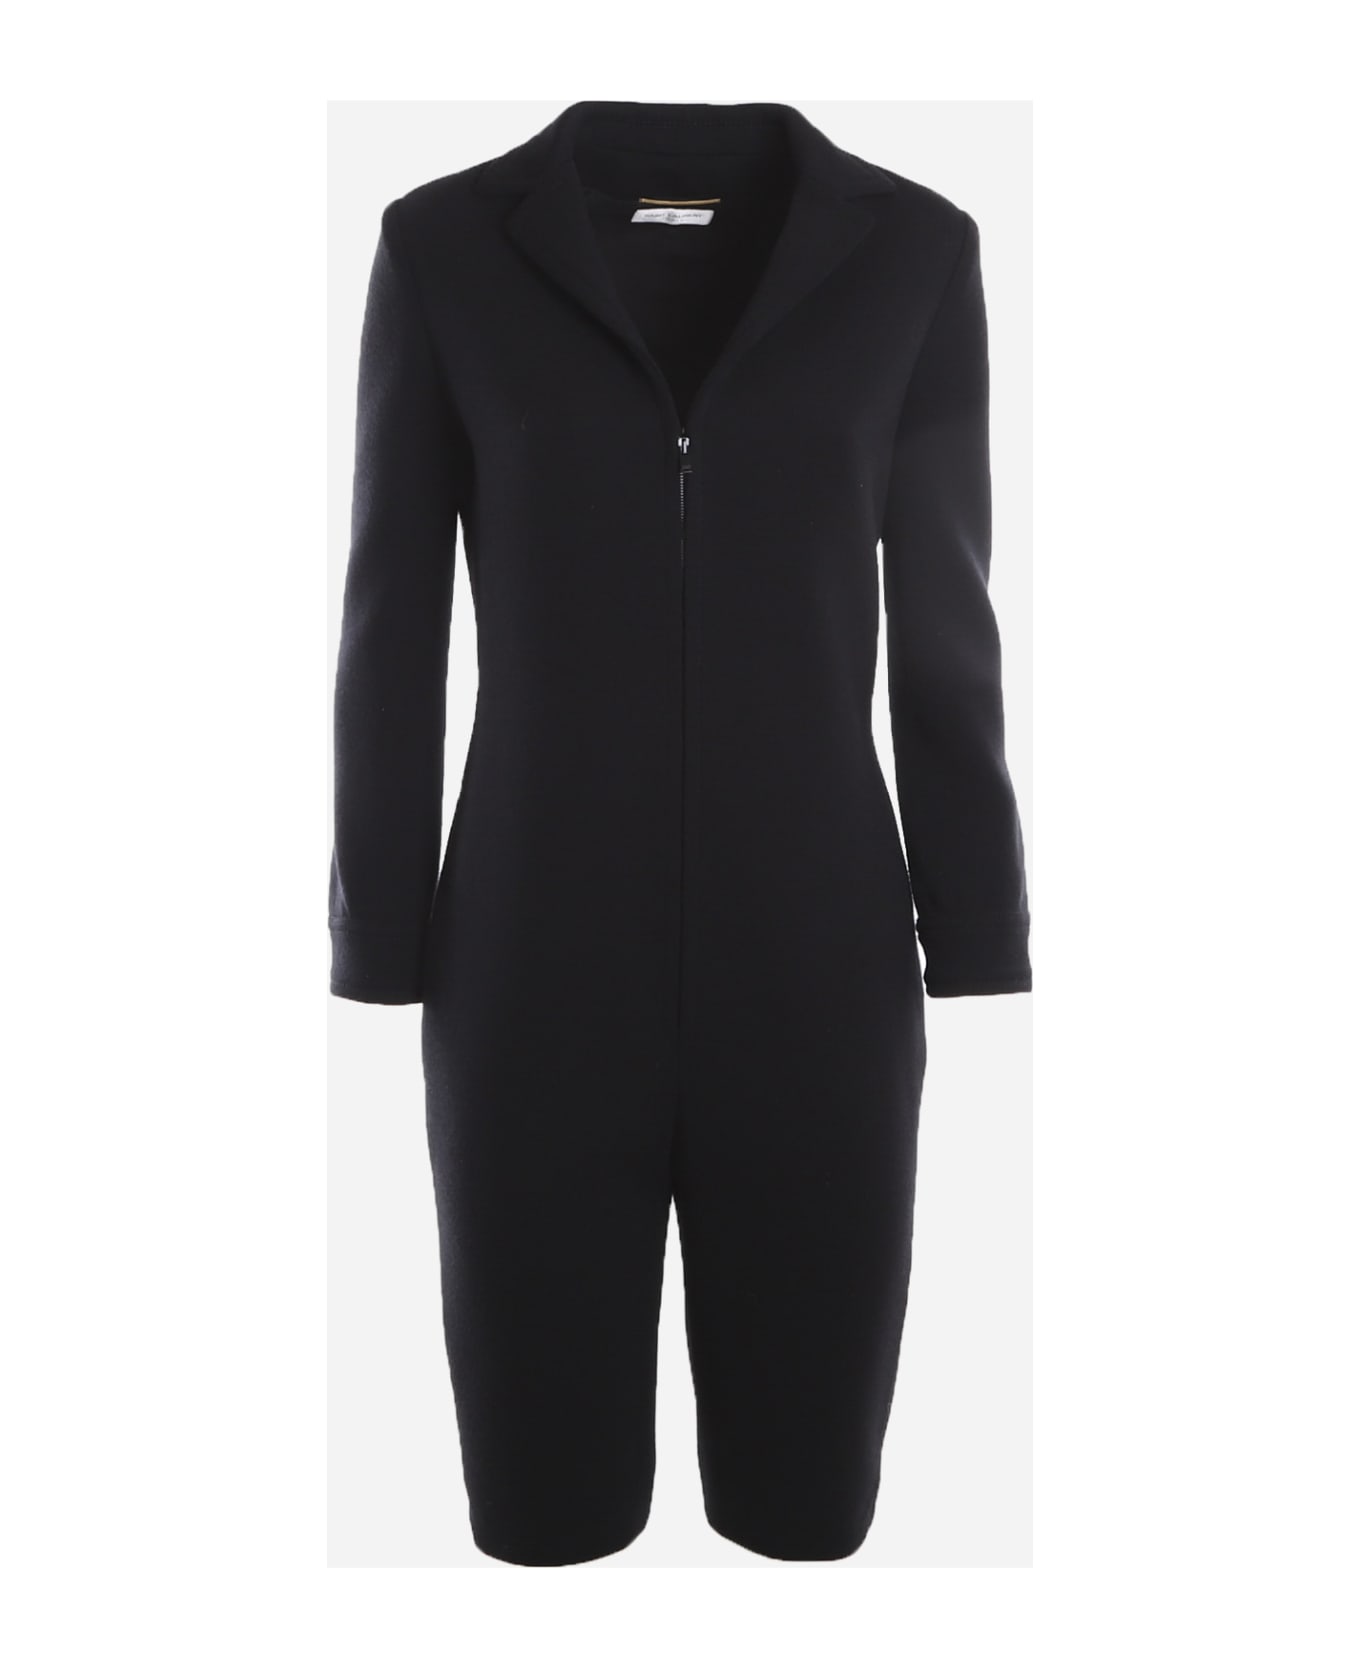 Saint Laurent Suit Made Of Wool Blend - Black